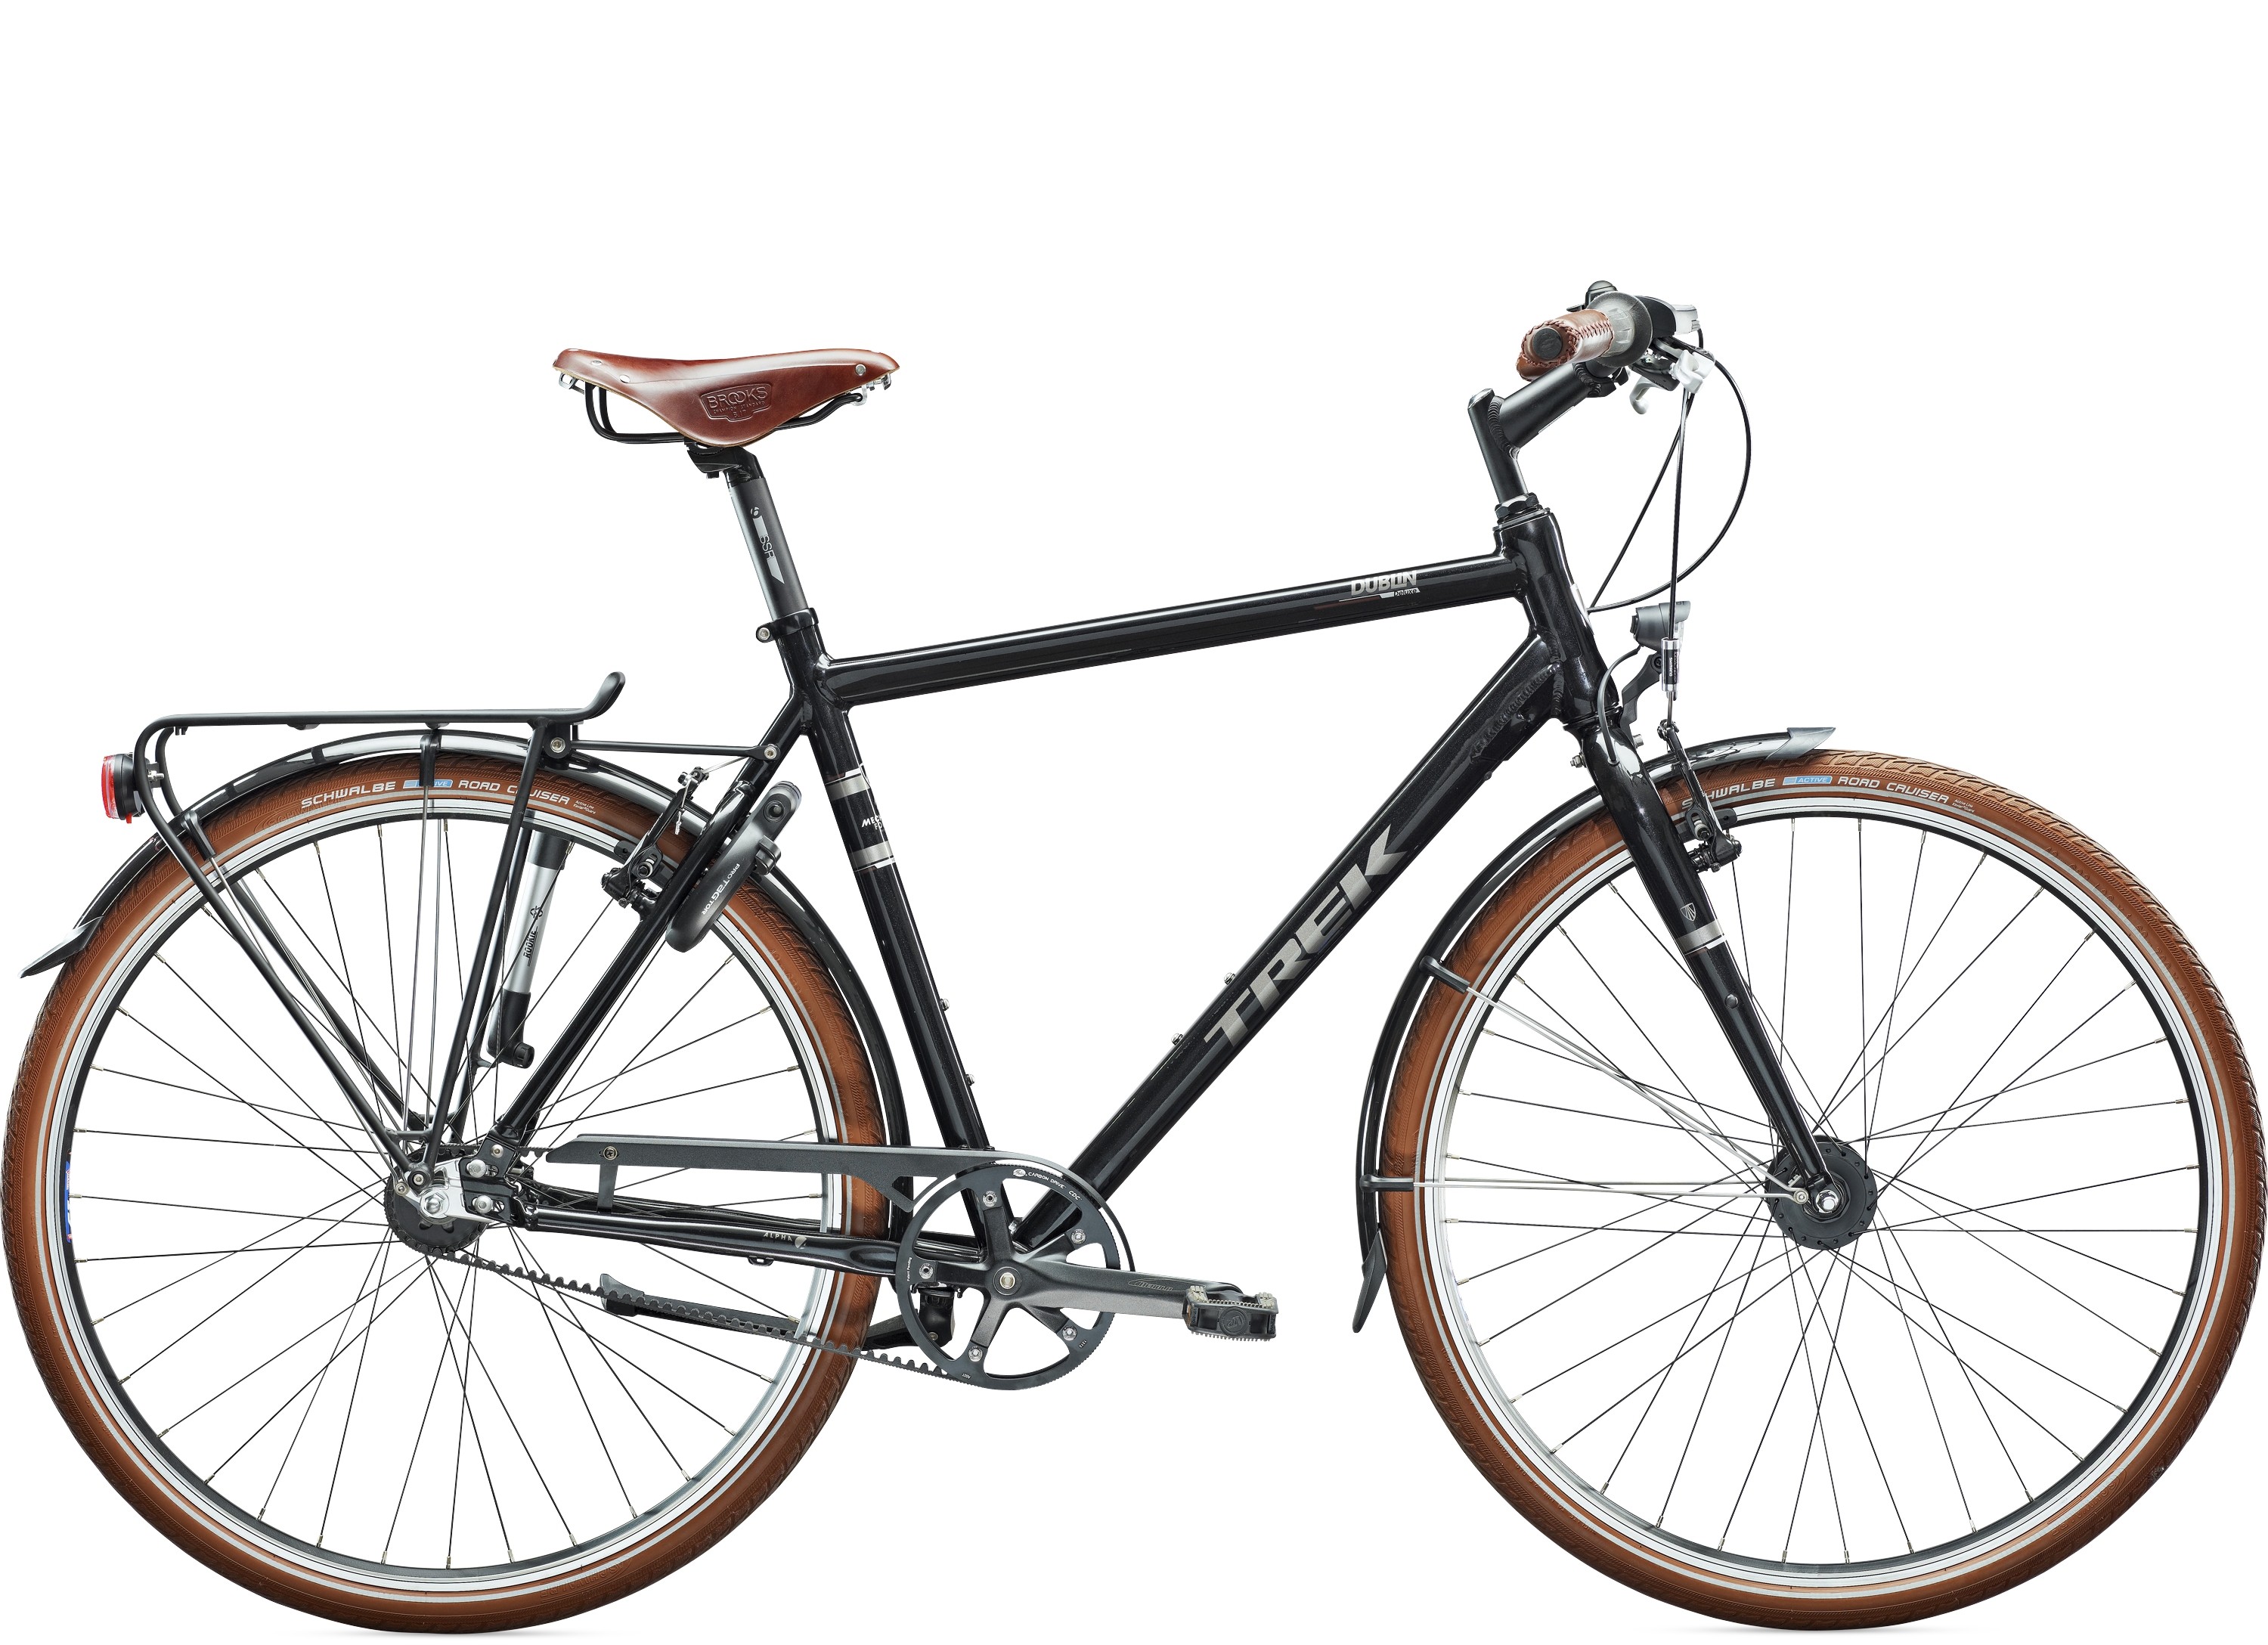 19 inch bike frame size